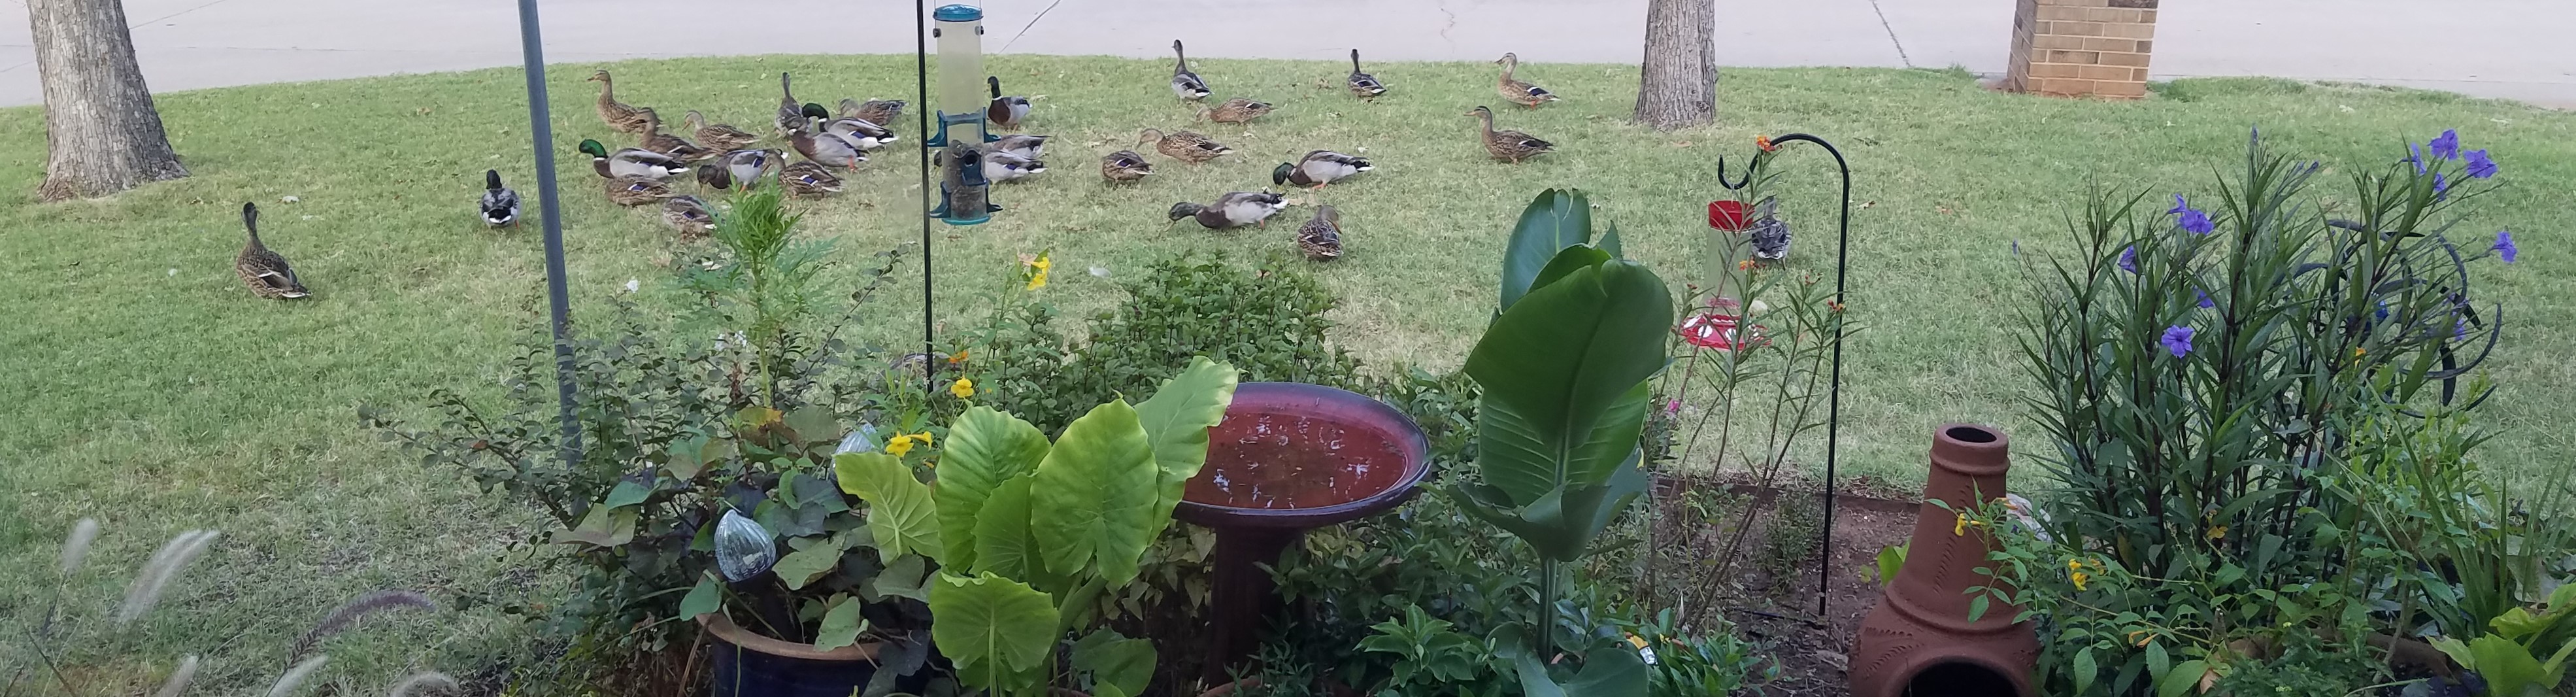 Ducks in the yard 092020.jpg